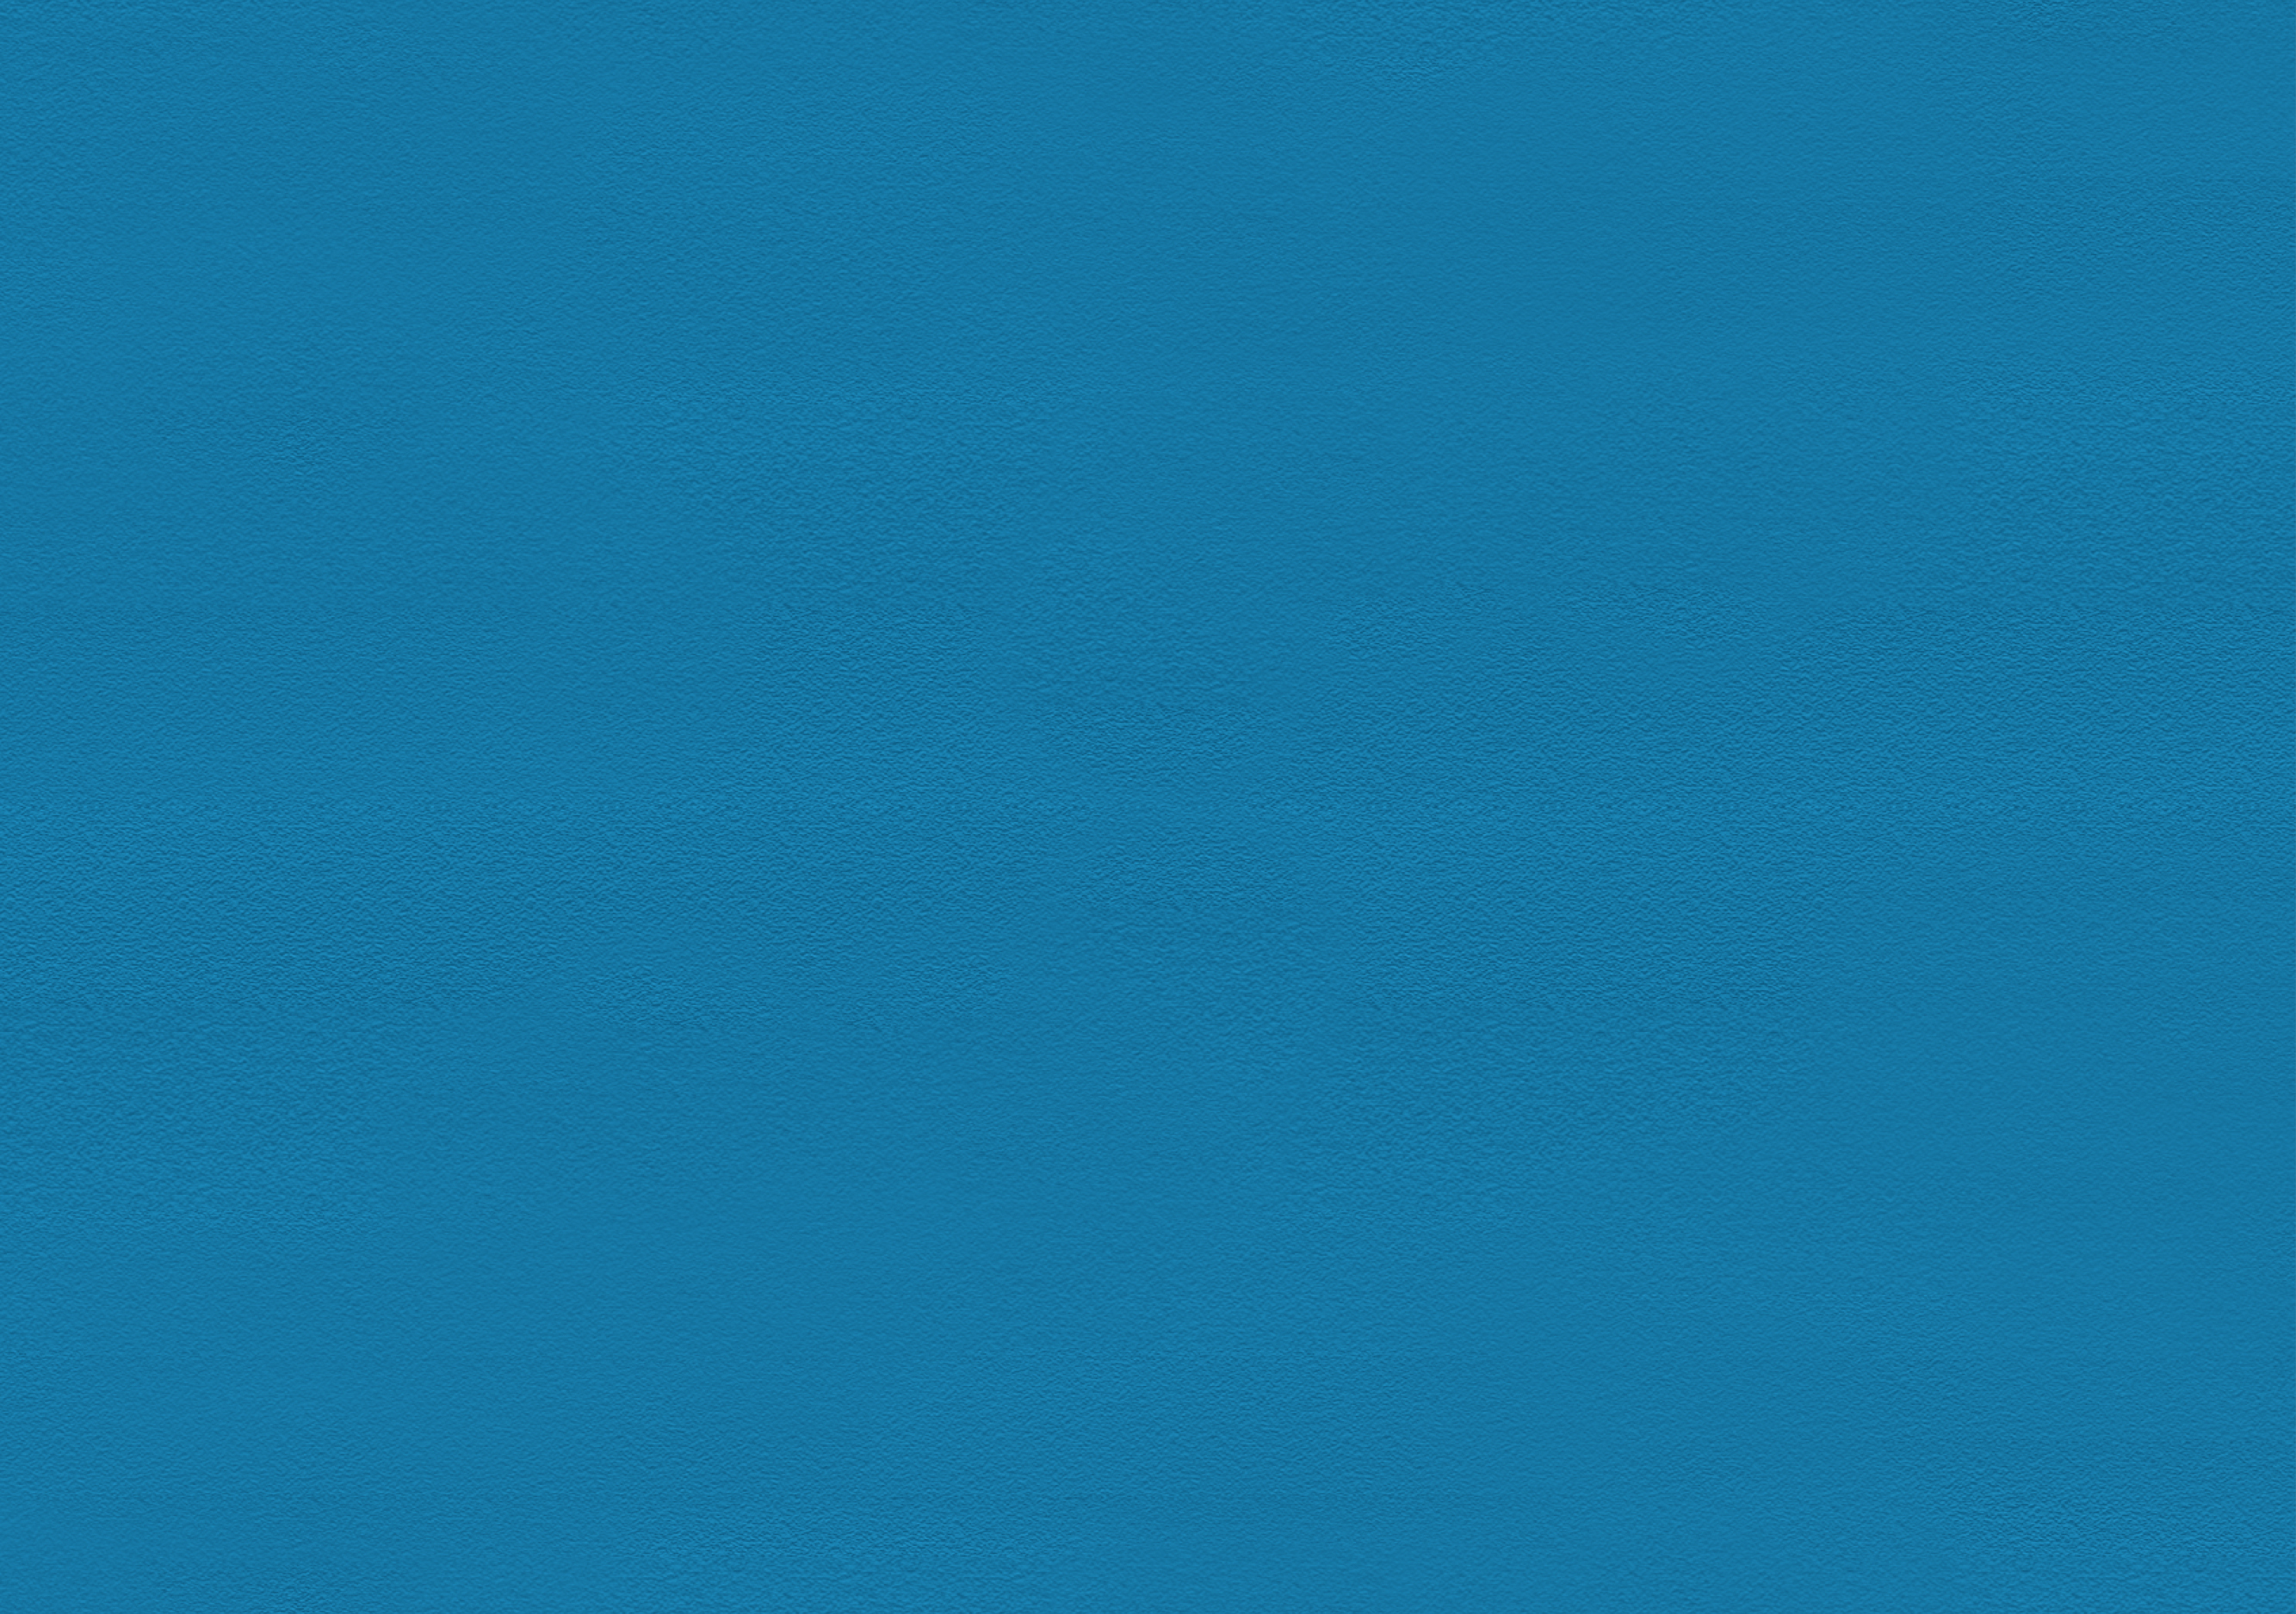 Background - Blue